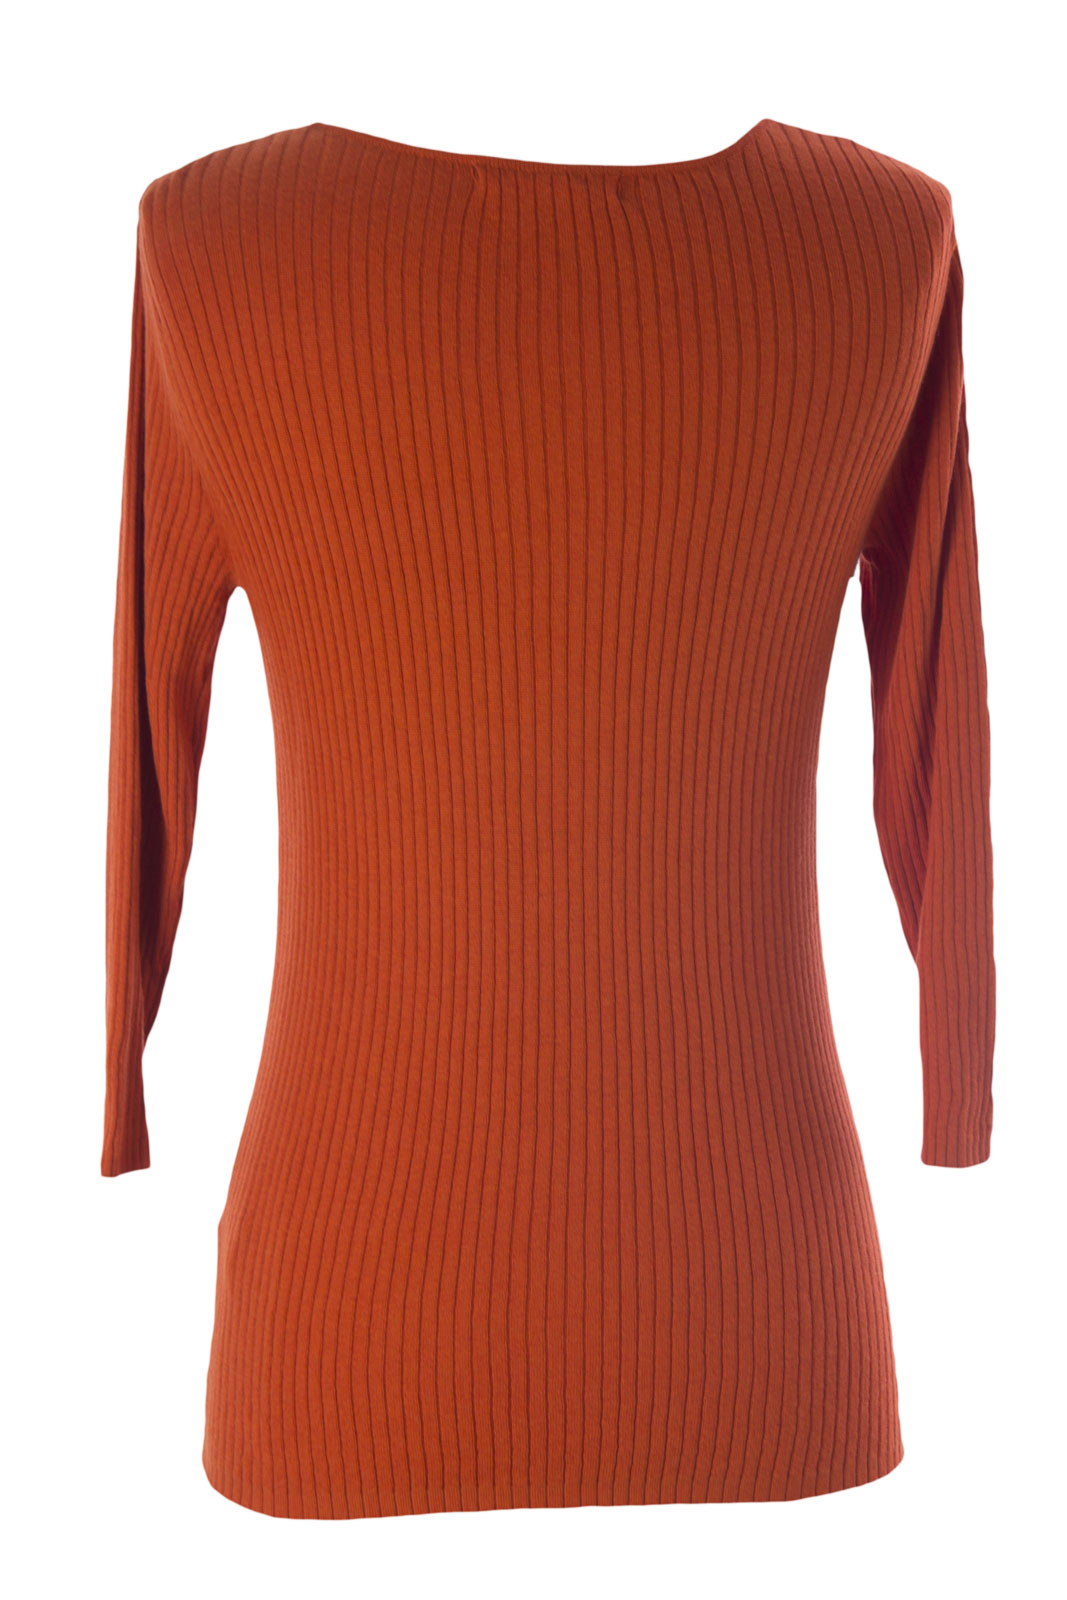 August Silk Women's Rib Knit 3/4 Sleeve Sweater NWT $58 | eBay